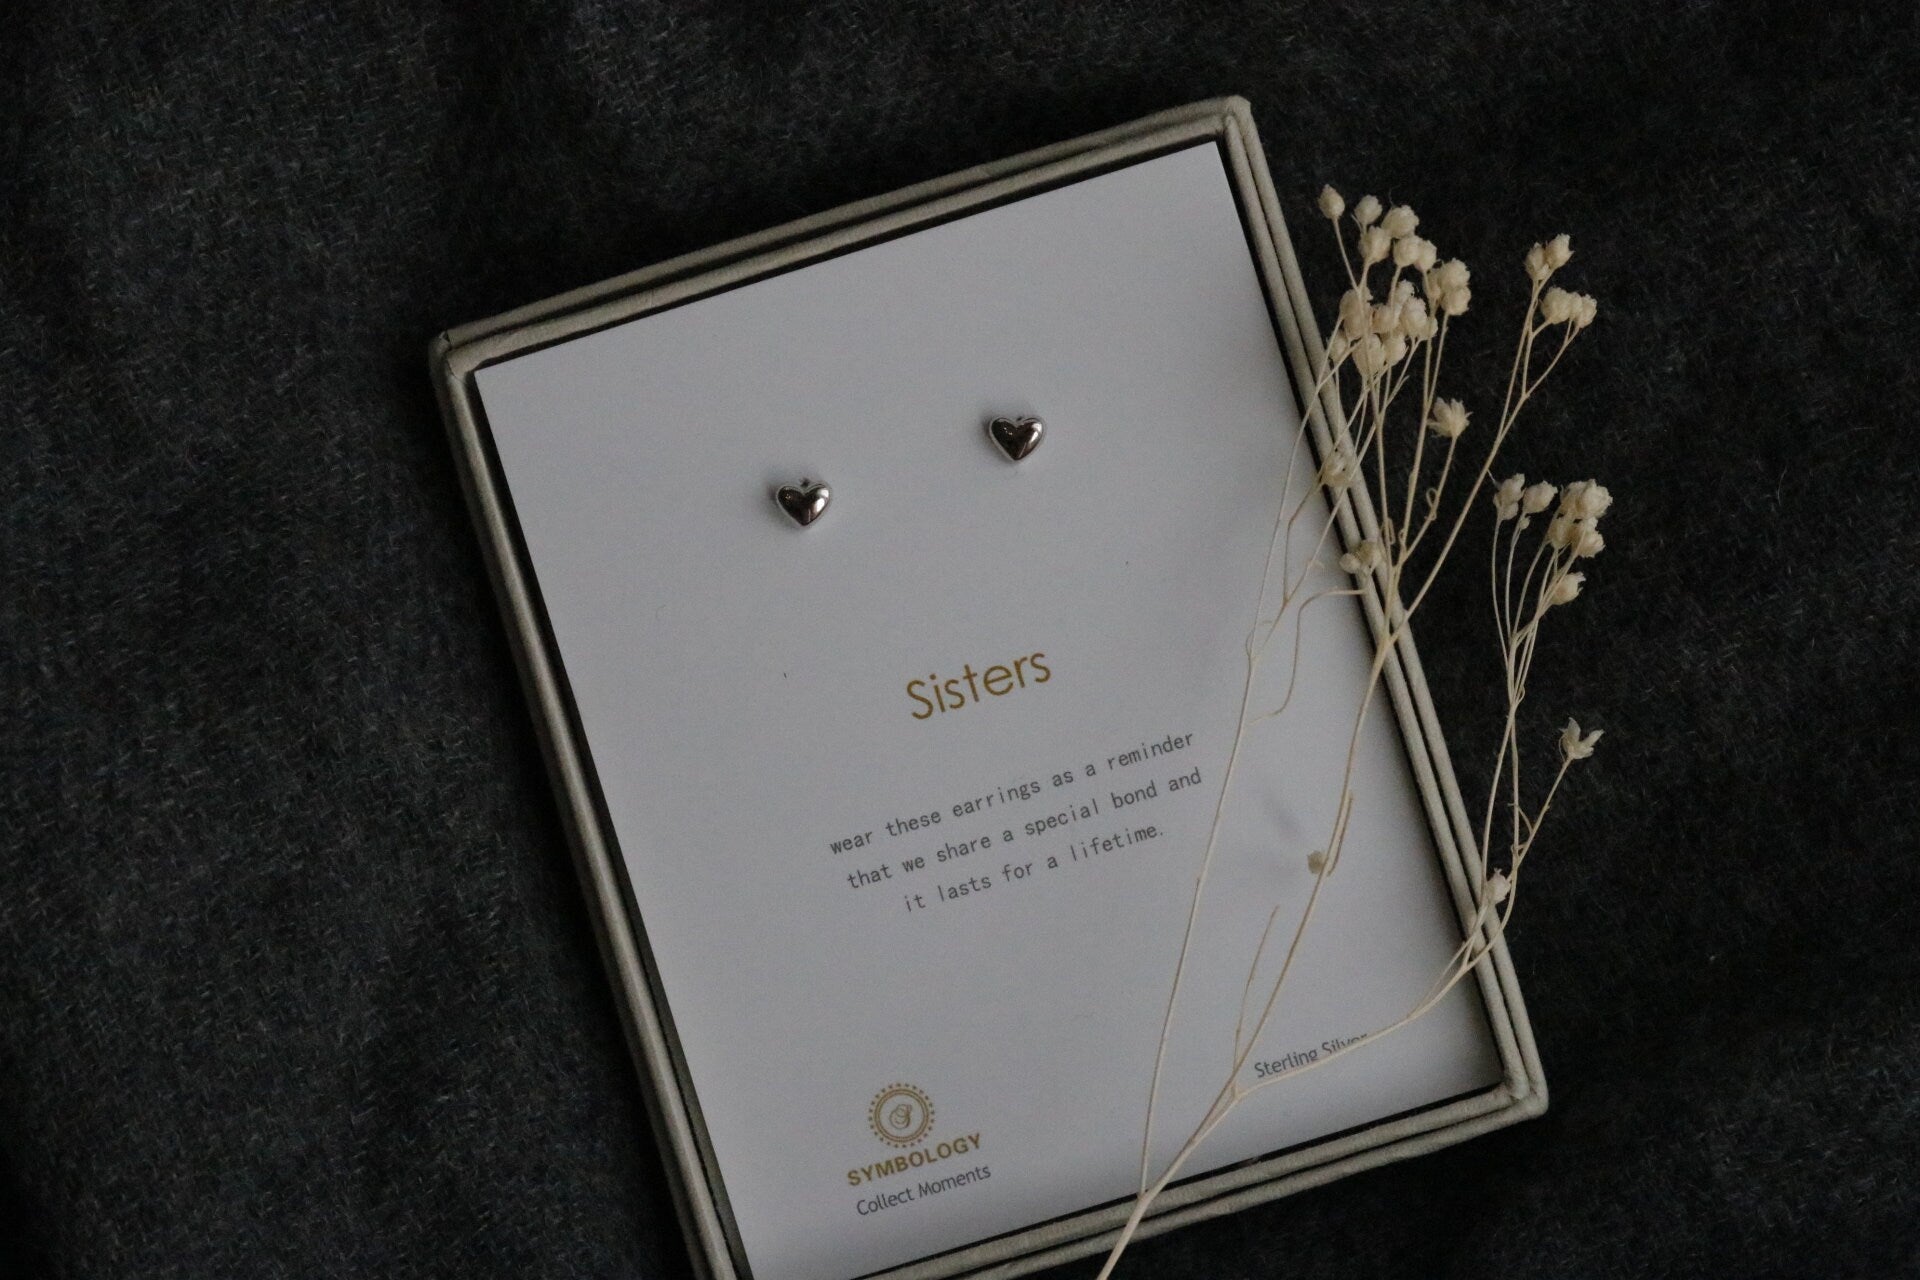 Gold Vermeil Dainty Love Heart Earrings / Symbology Love Heart Studs For Sister / Personalised Gift for Soul Sister / Gift for Her